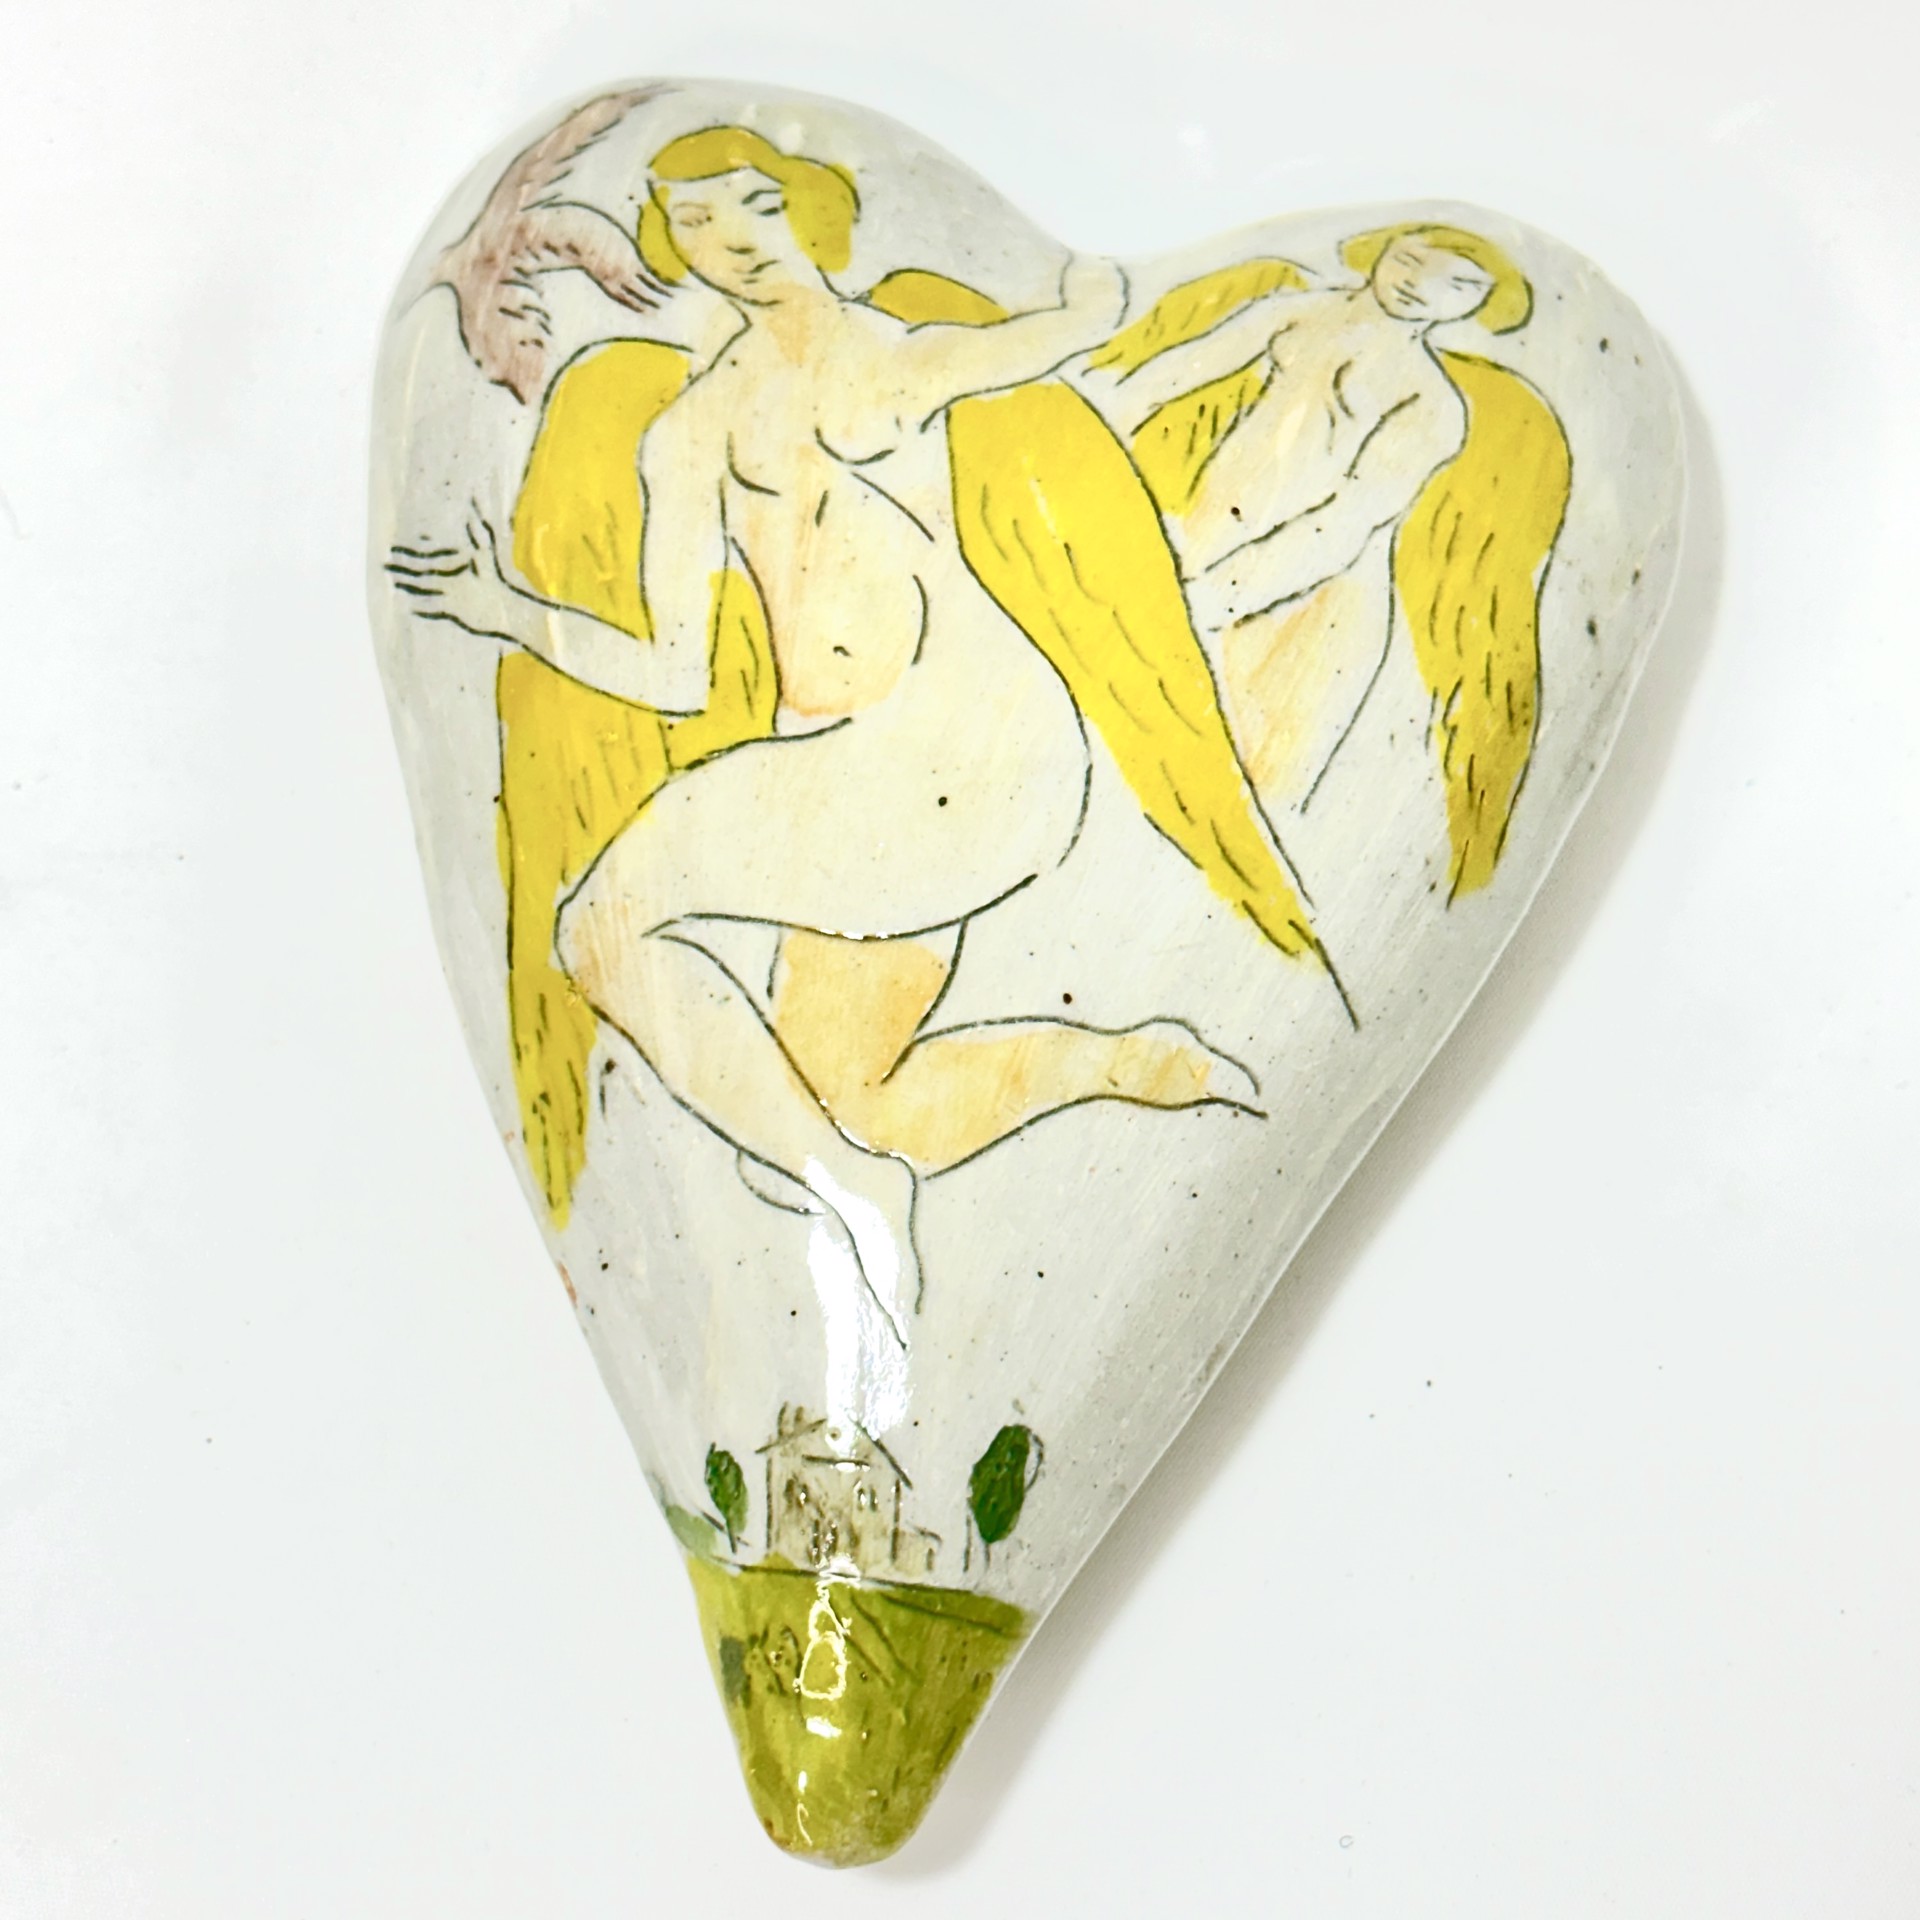 Angel Heart #1 by Julius Forzano